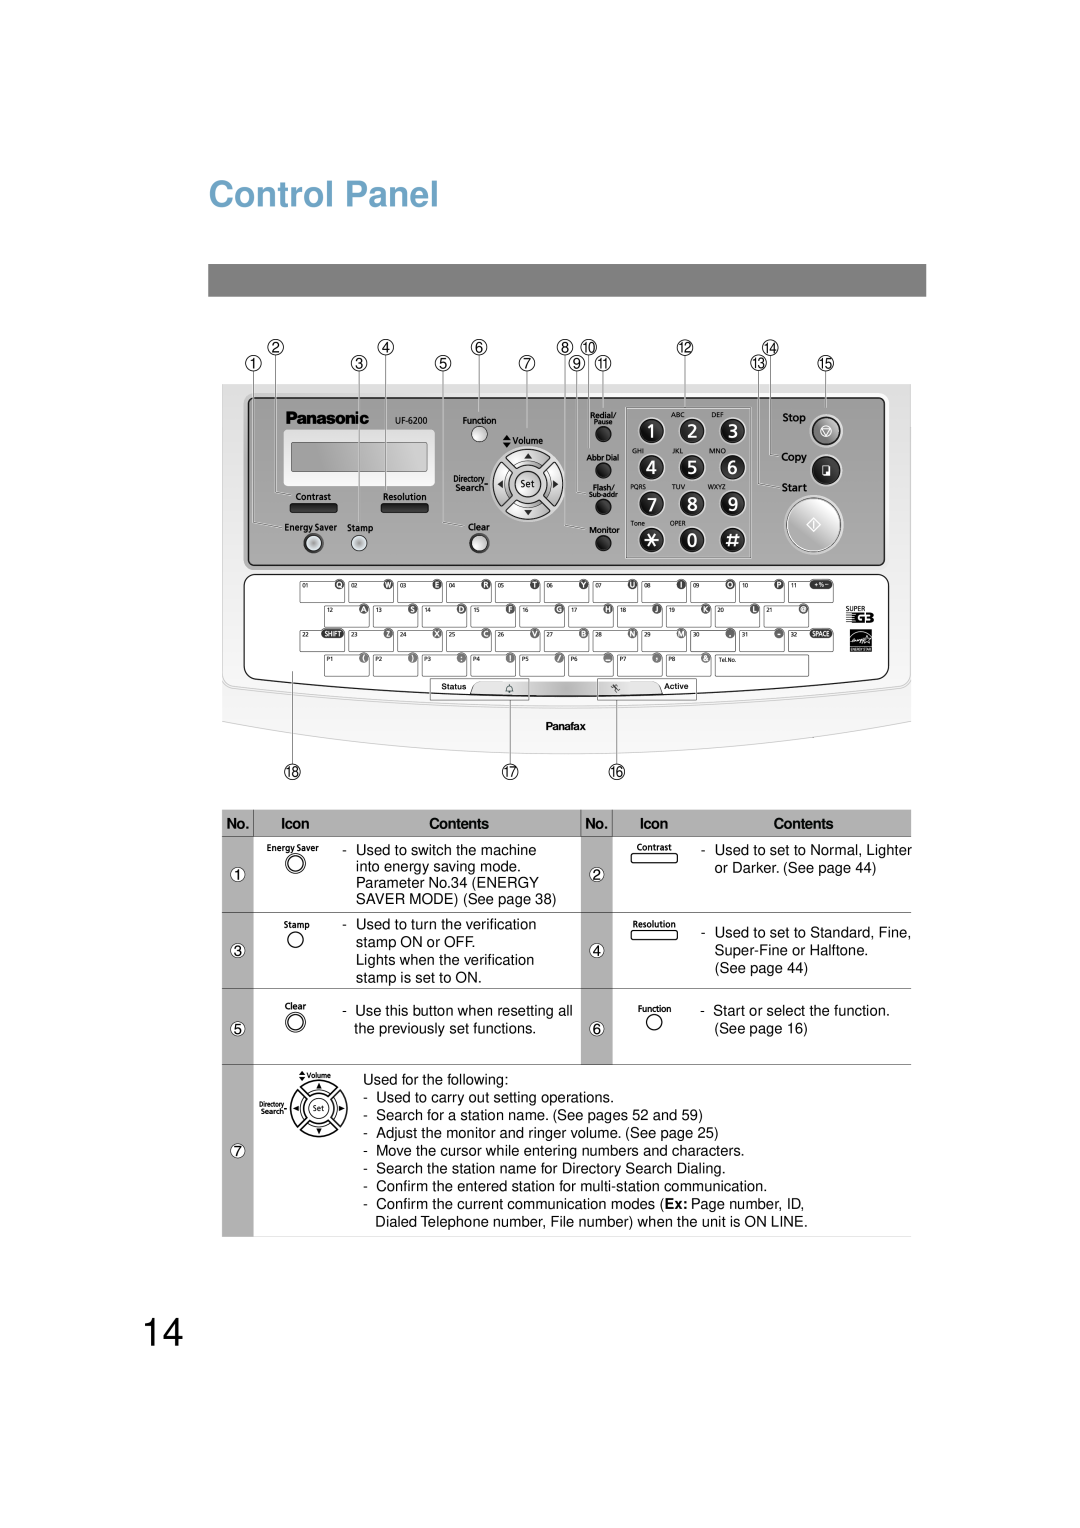 Panasonic UF-6200 operating instructions Control Panel, IconContents 